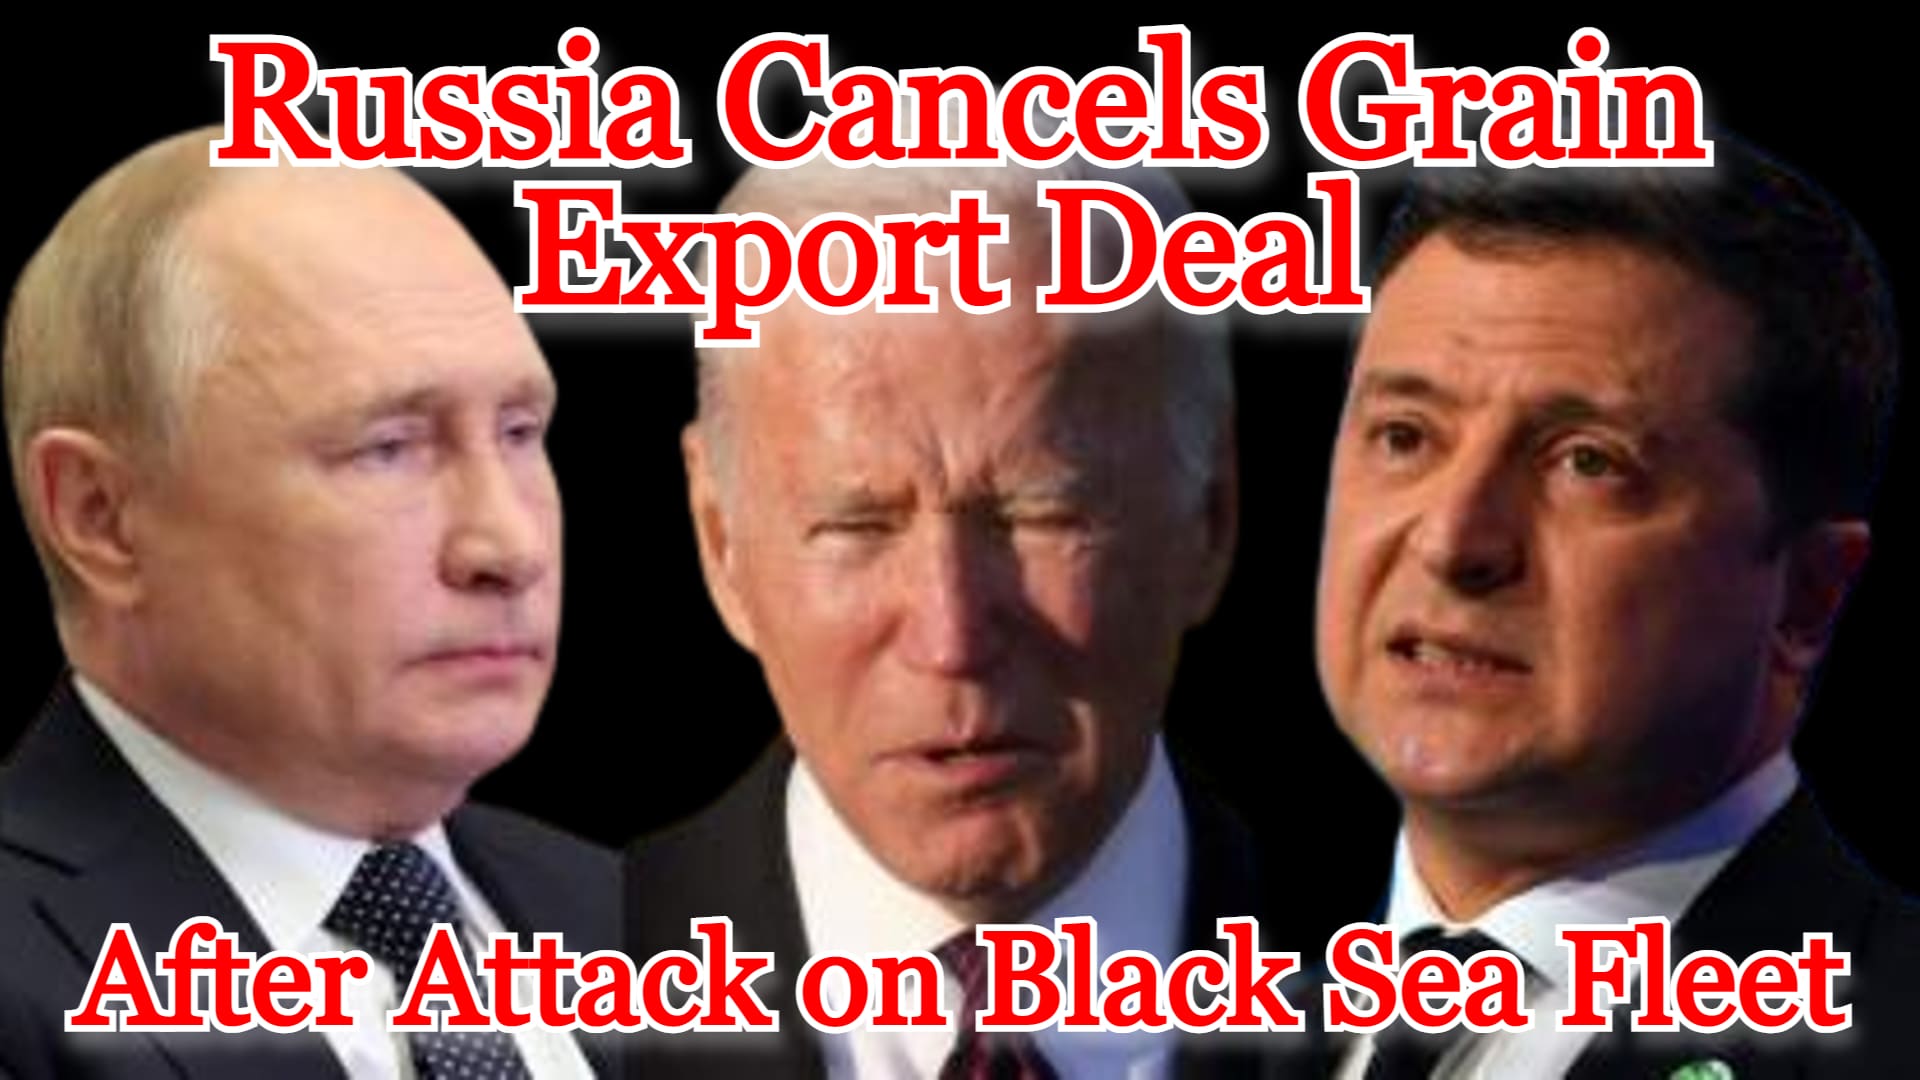 COI #344: Russia Cancels Grain Export Deal After Attack on Black Sea Fleet